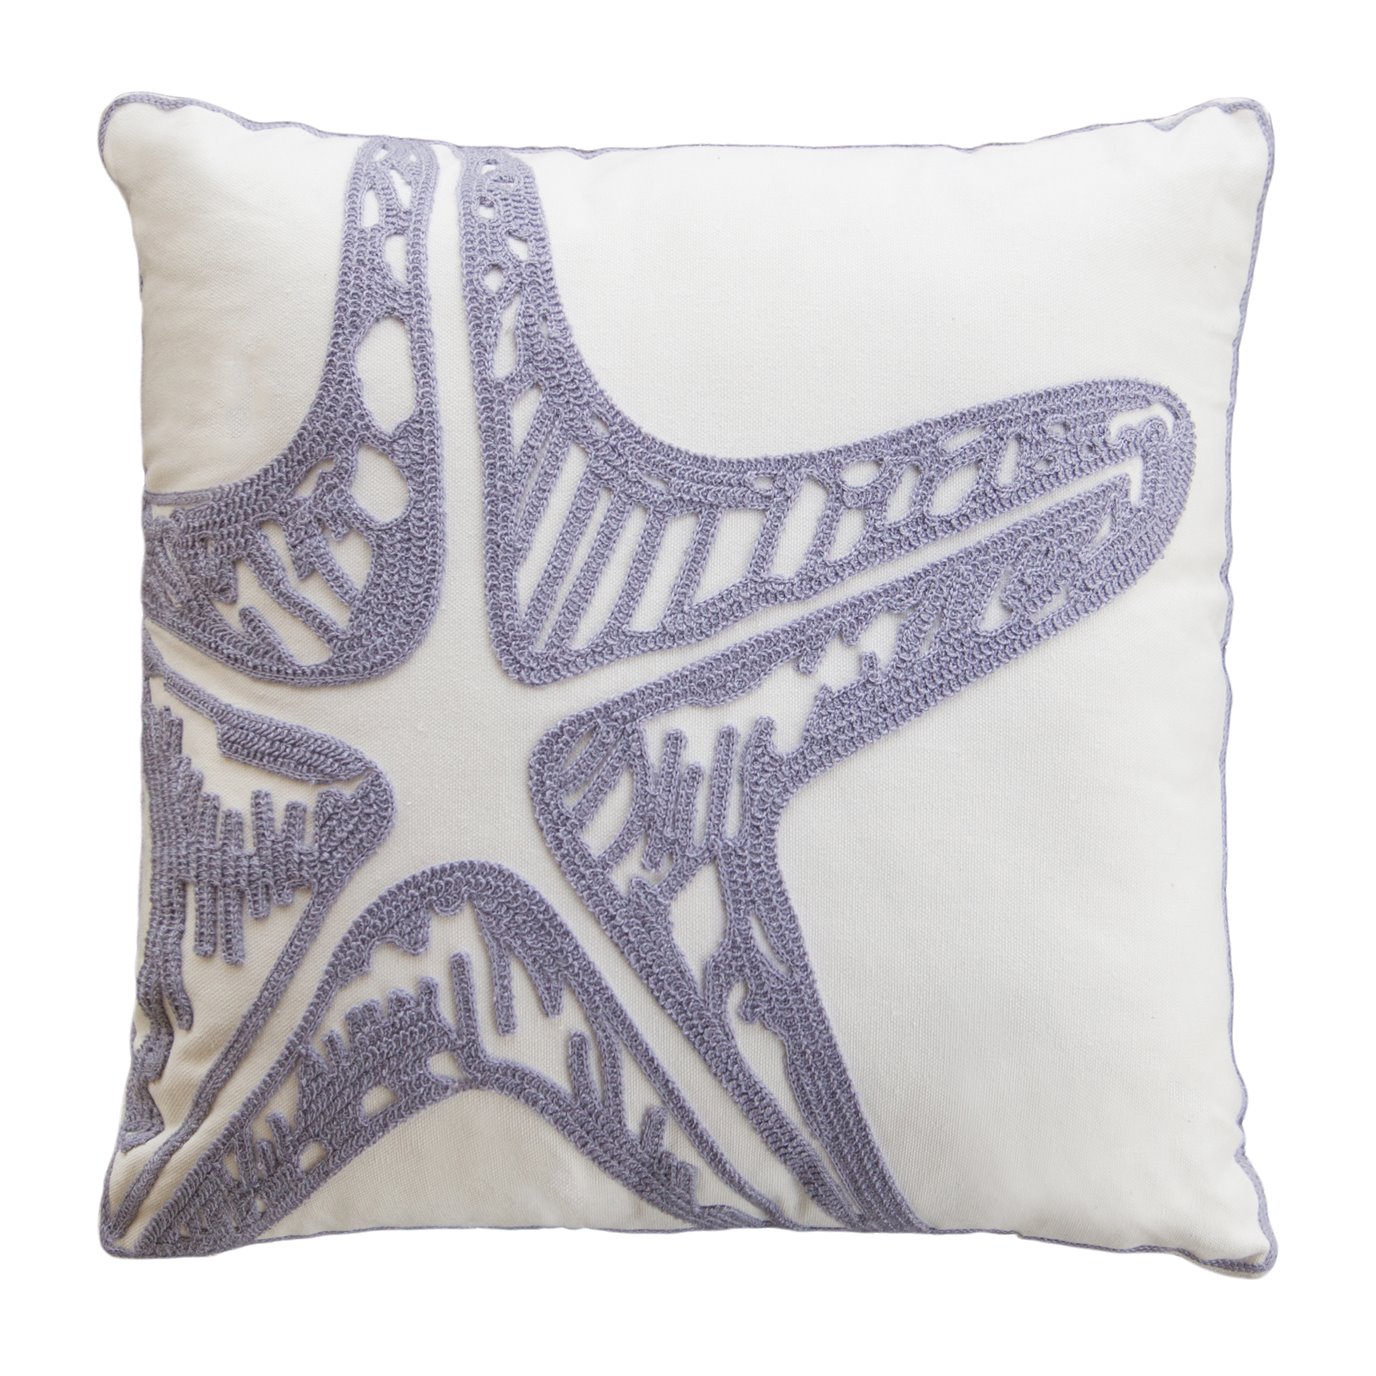 Lavendar Starfish pillow